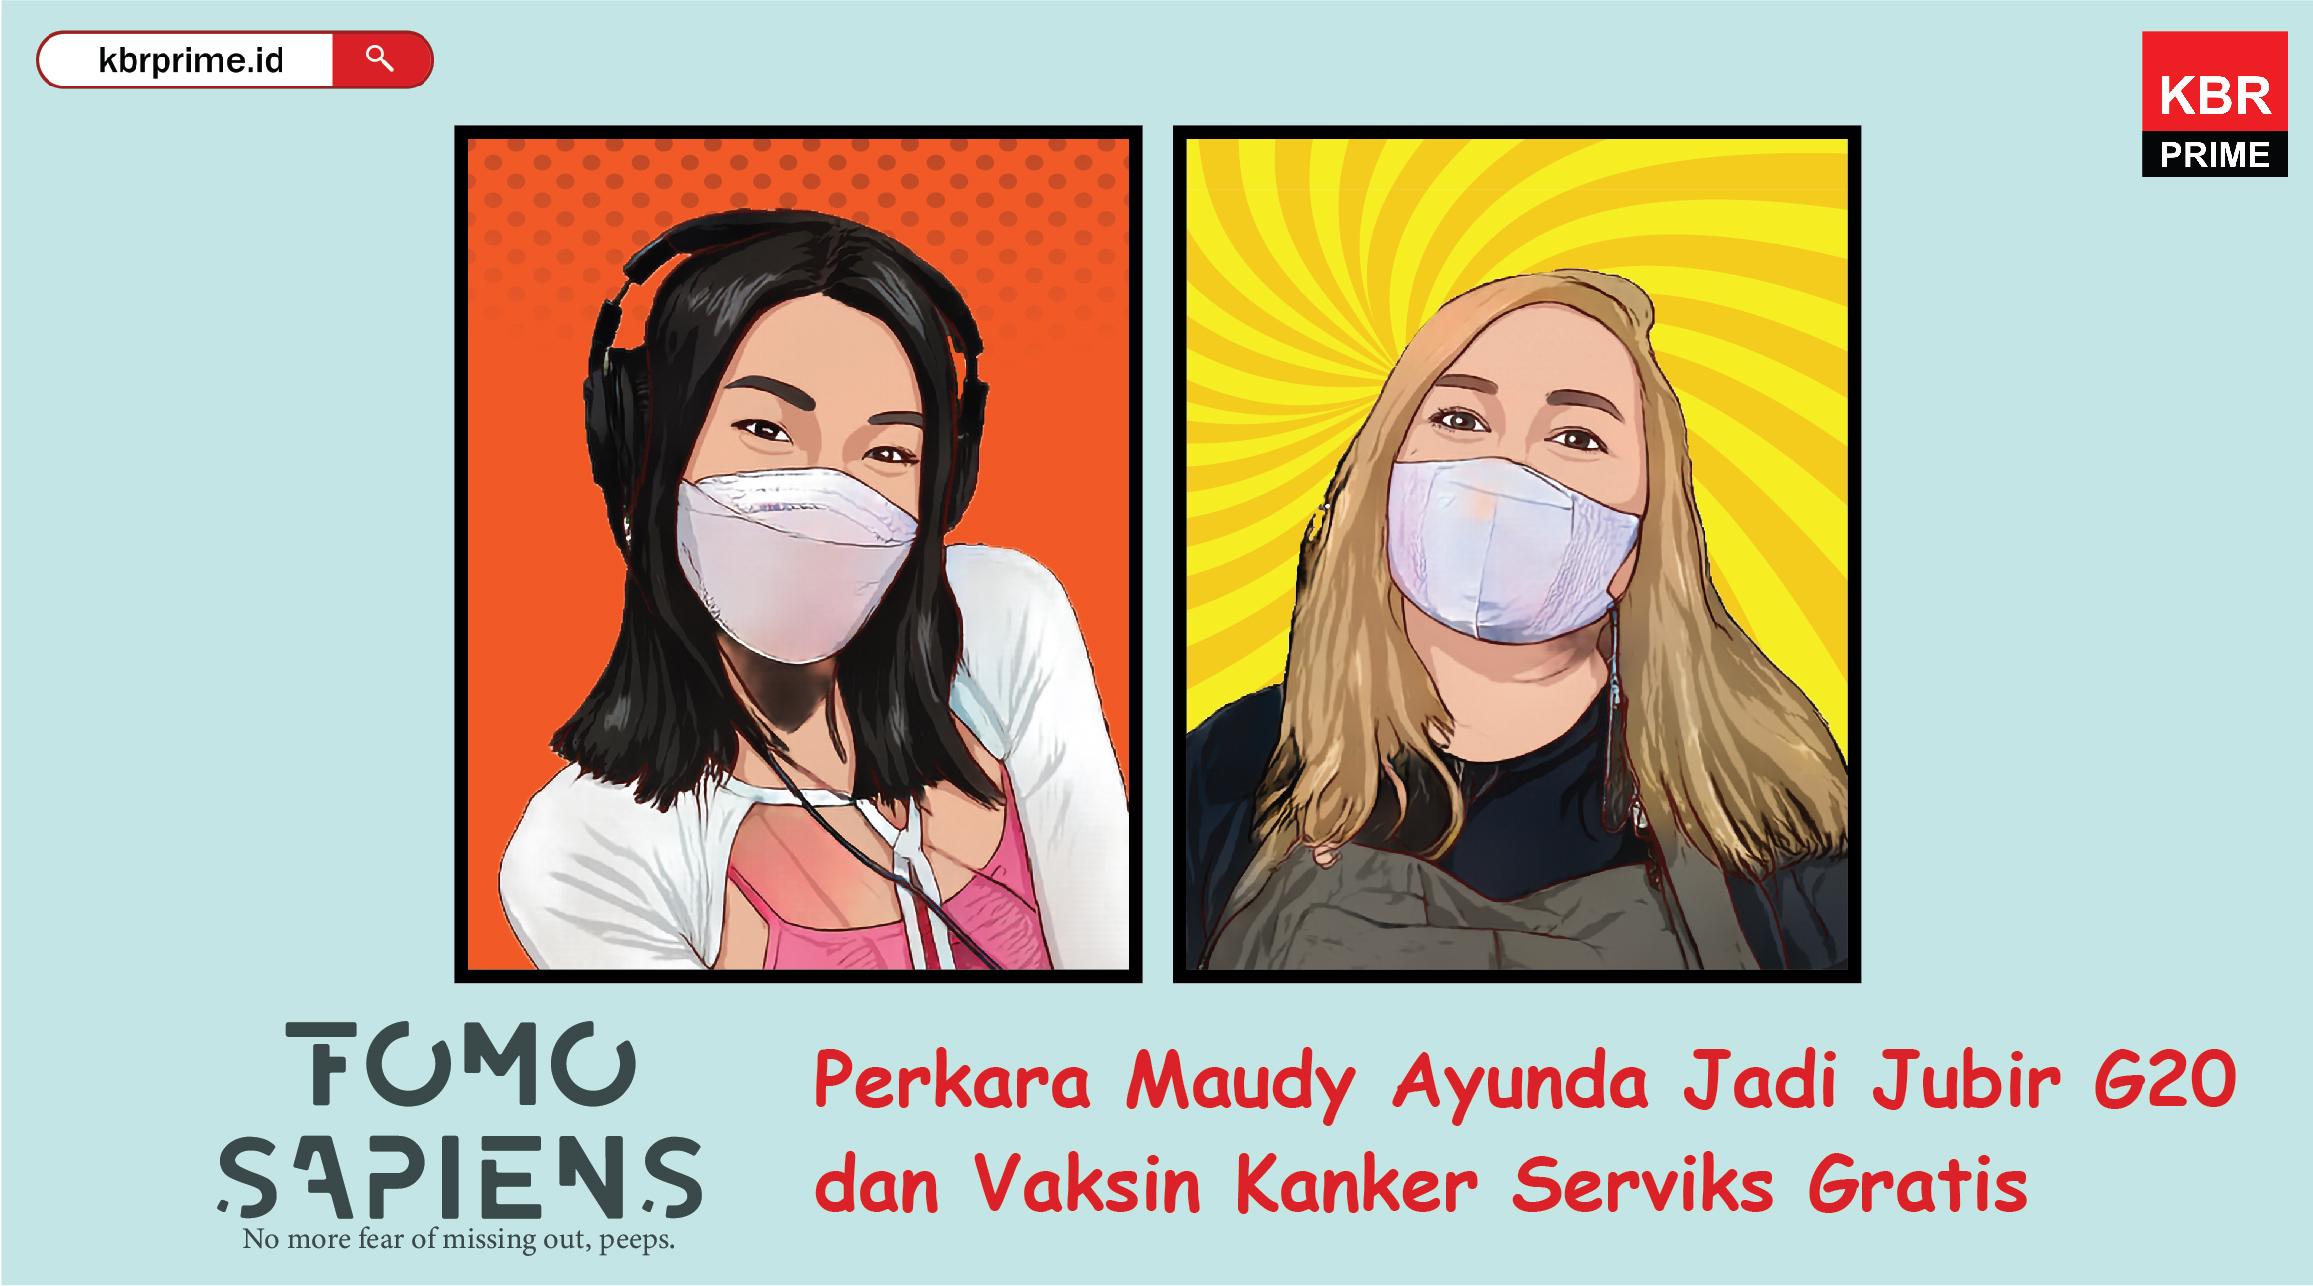 FOMO Sapiens : Perkara Maudy Ayunda Jadi Jubir G20 dan Vaksin Kanker Serviks Gratis